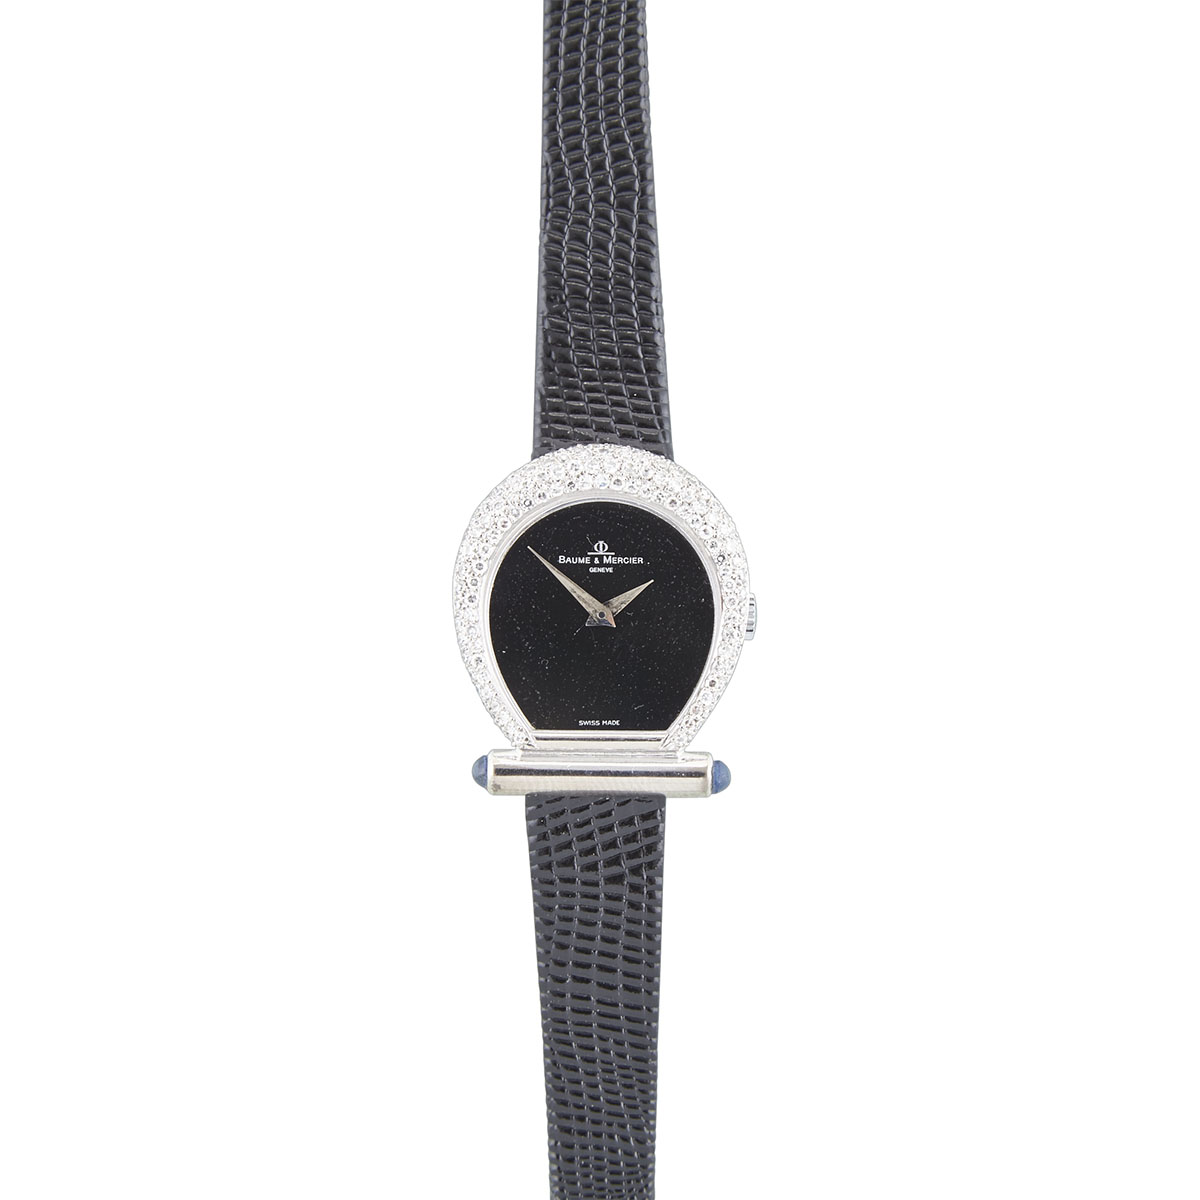 Lady’s Baume & Mercier Wristwatch 